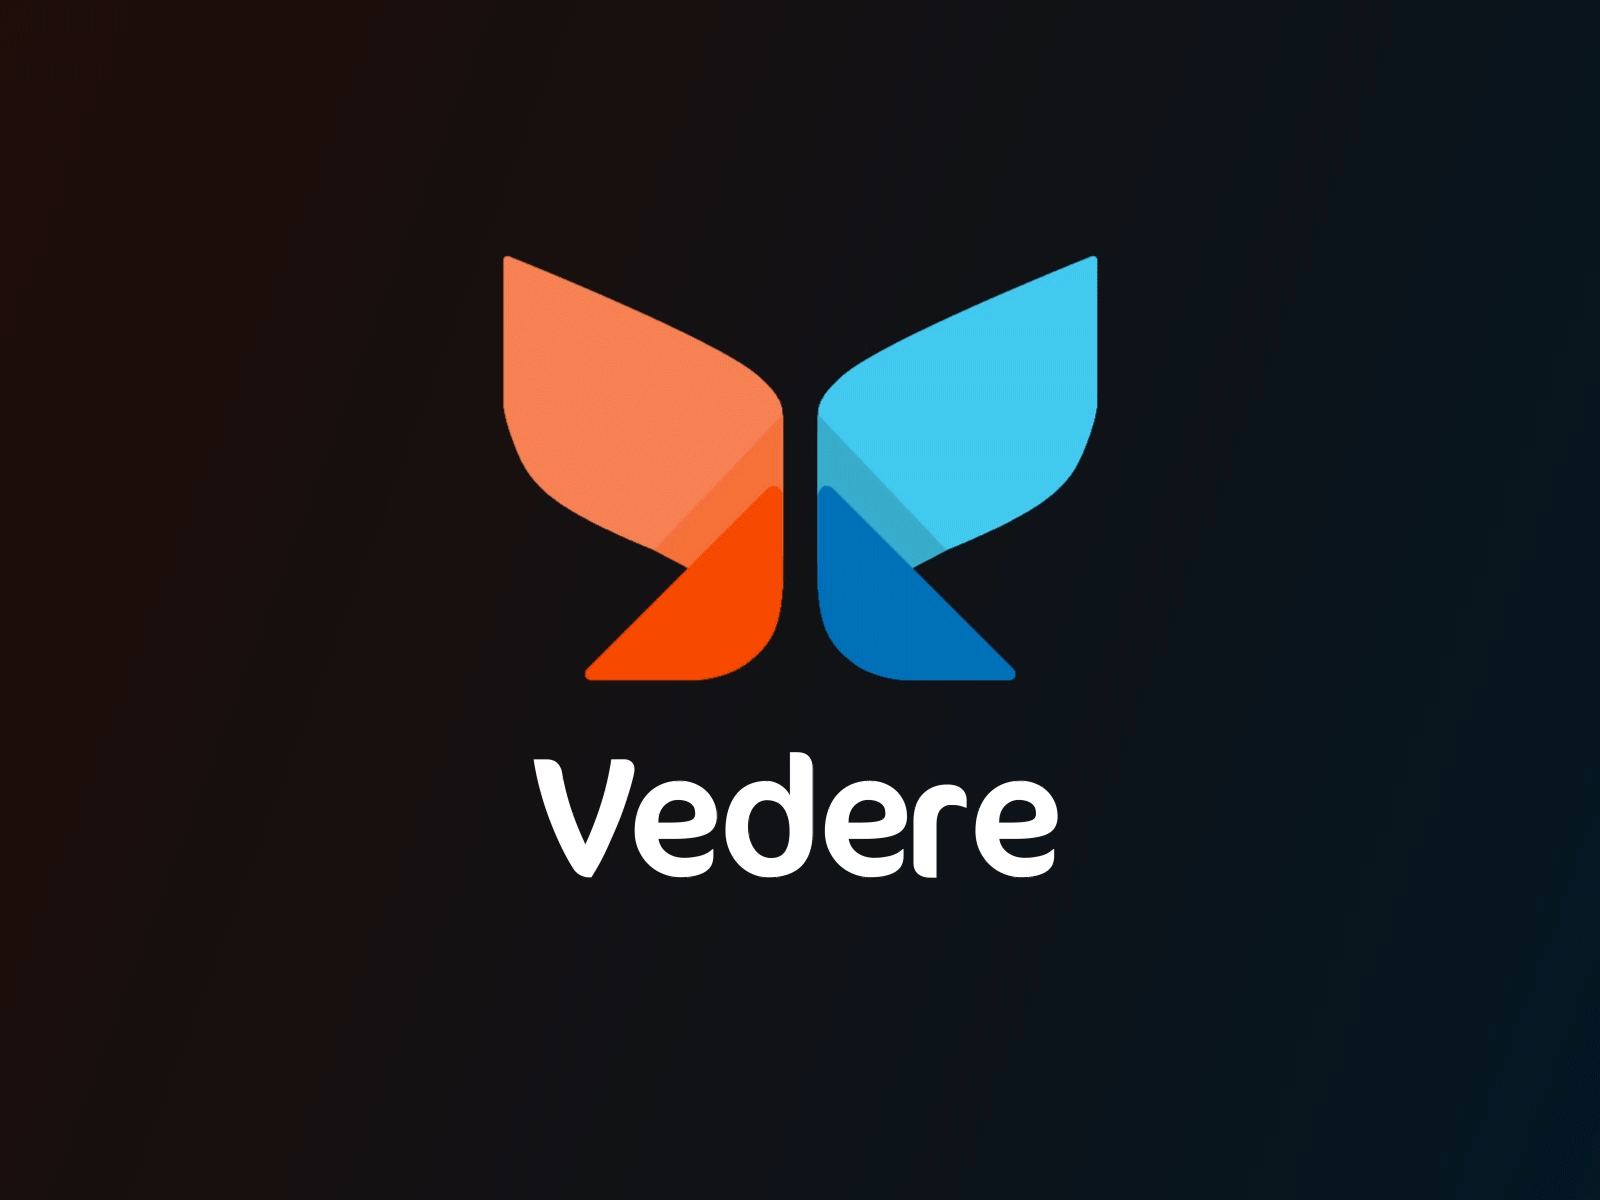 Vedere - logo reveal